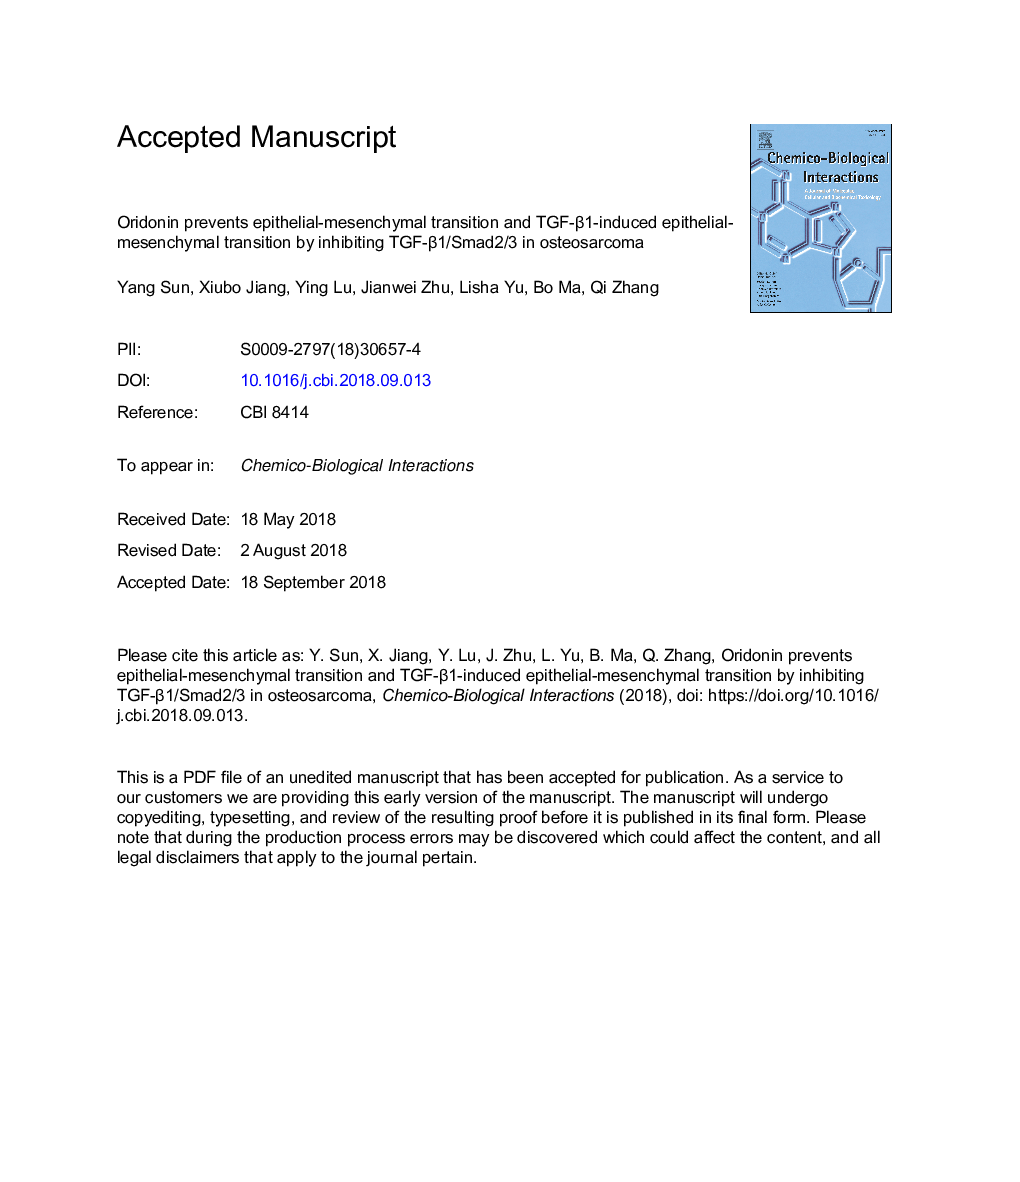 Oridonin prevents epithelial-mesenchymal transition and TGF-Î²1-induced epithelial-mesenchymal transition by inhibiting TGF-Î²1/Smad2/3 in osteosarcoma